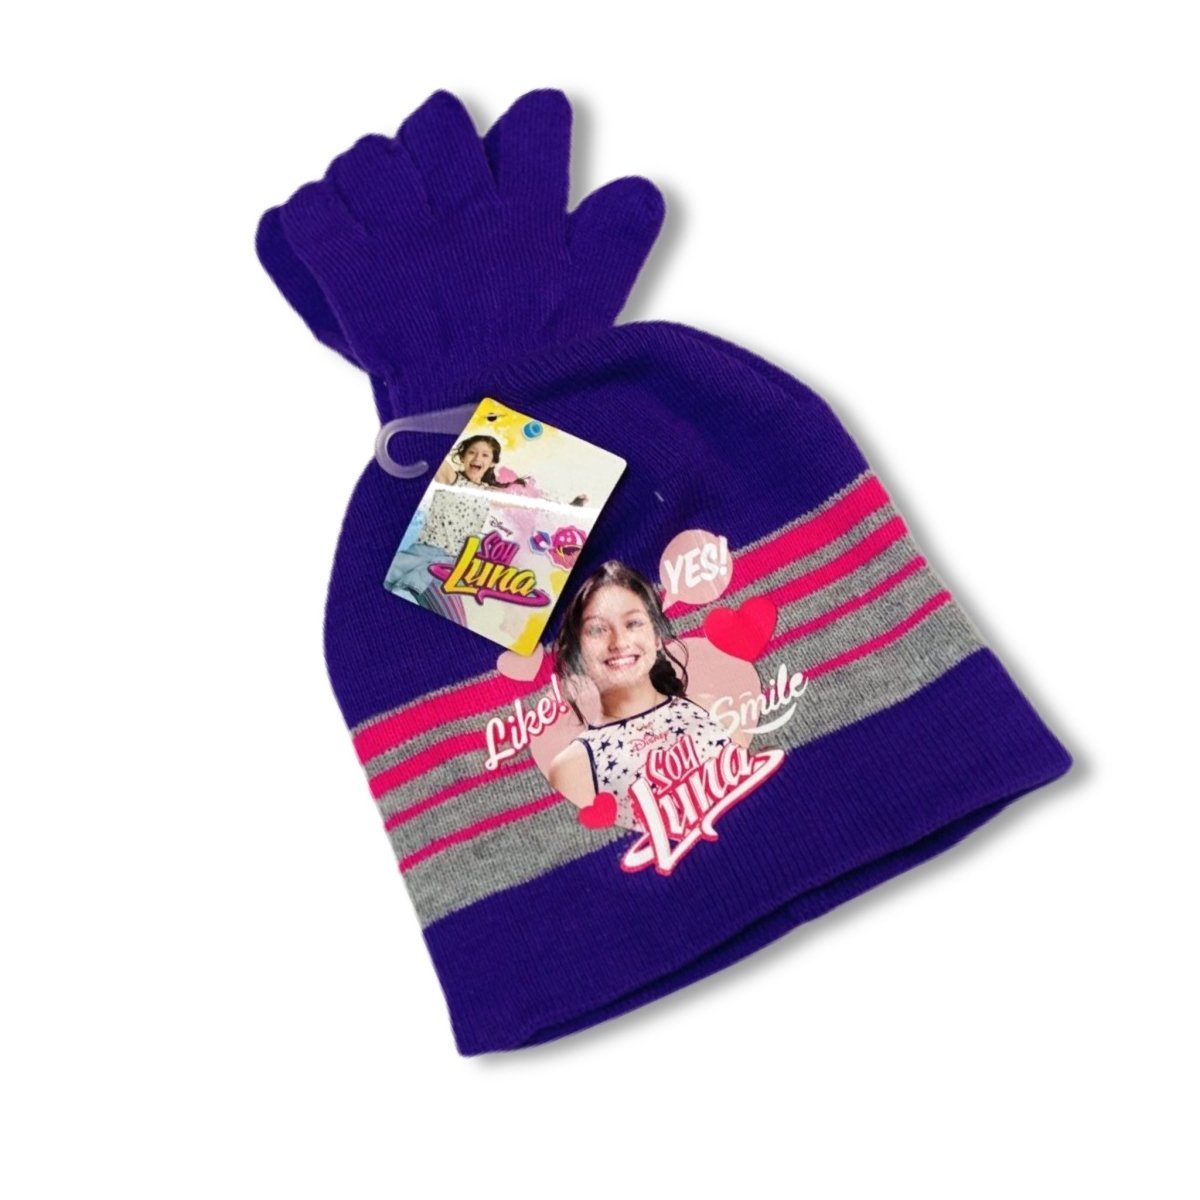 Cappello in Lana Soy Luna - Mstore016 - cappelli - Disney